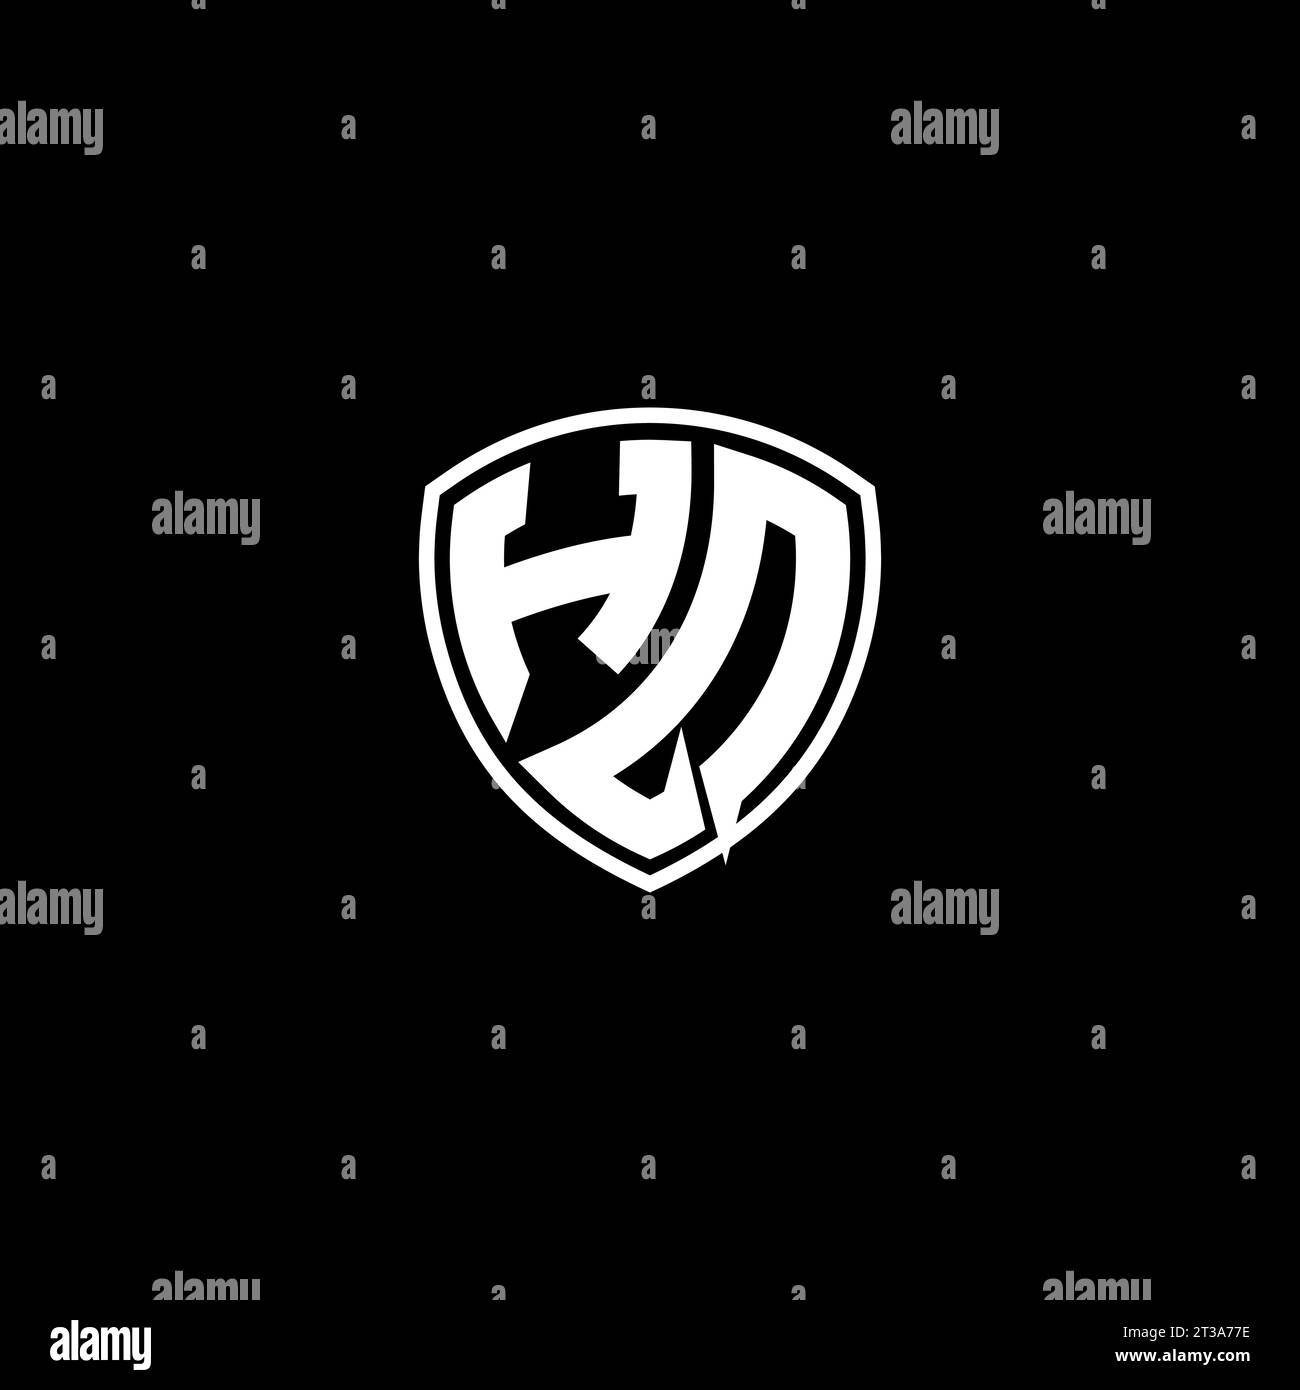 HQ logo monogram emblem style with shield shape design template ideas Stock Vector